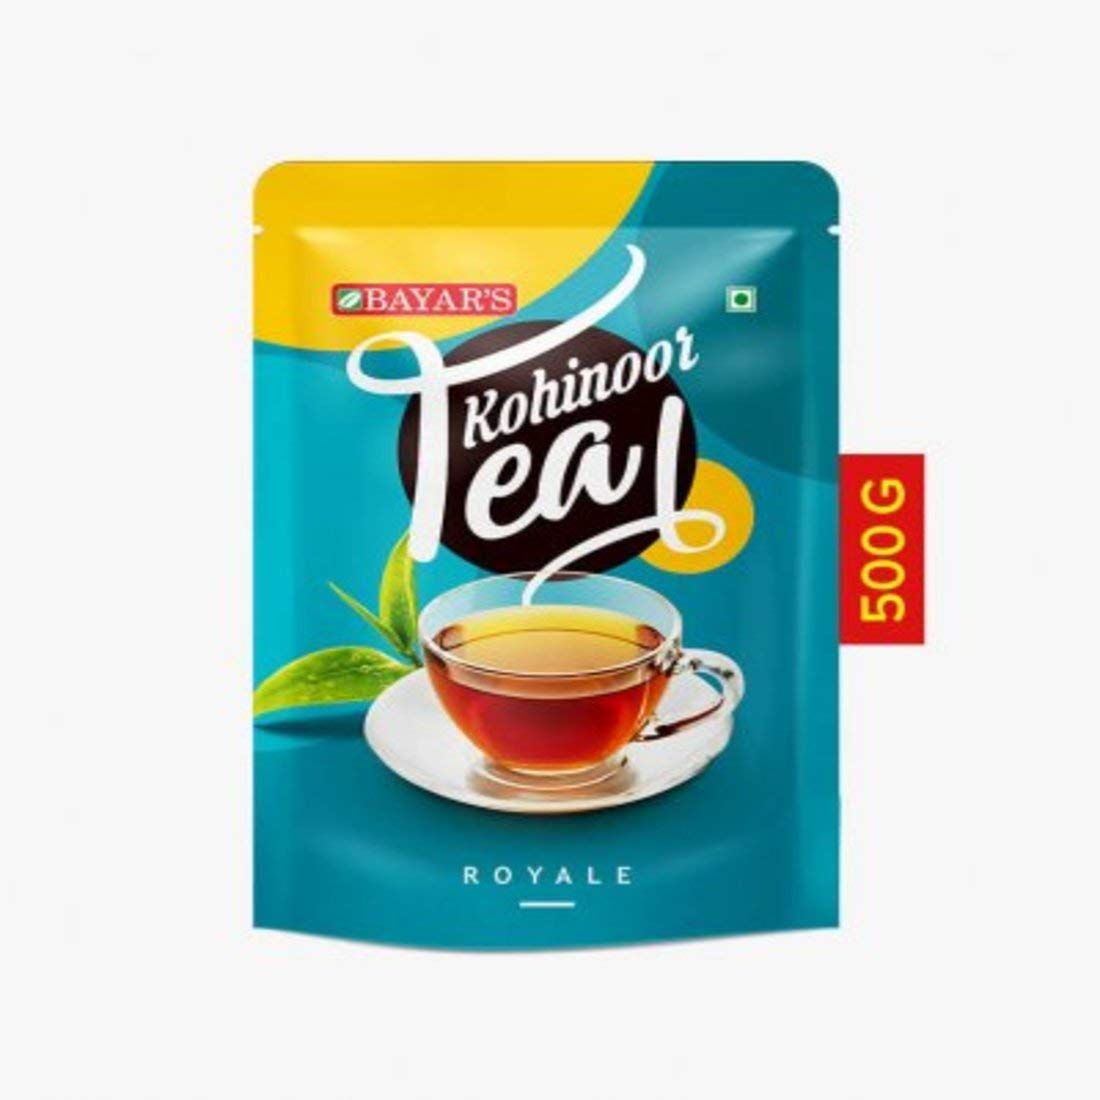 Bayar's Kohinoor Tea Royale Image